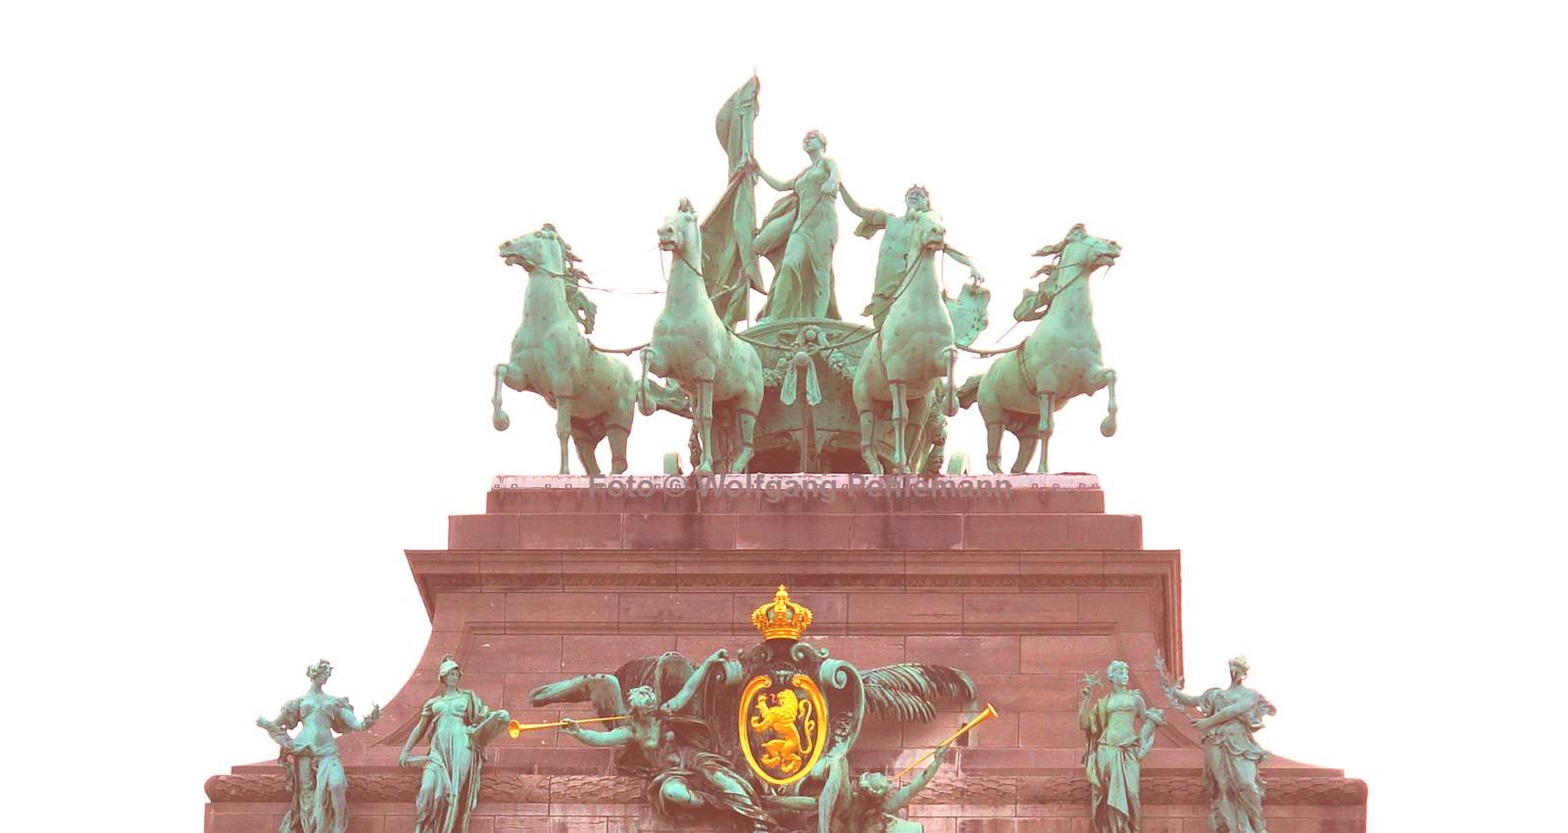 Brüsseler Quadriga auf dem dreifachen Triumphbogen am am Parc du Cinquantenaire. Die Quadriga symbolisiert die zentrale Dominanz der Provinz Brabant in Belgien. Foto © Wolfgang Pehlemann